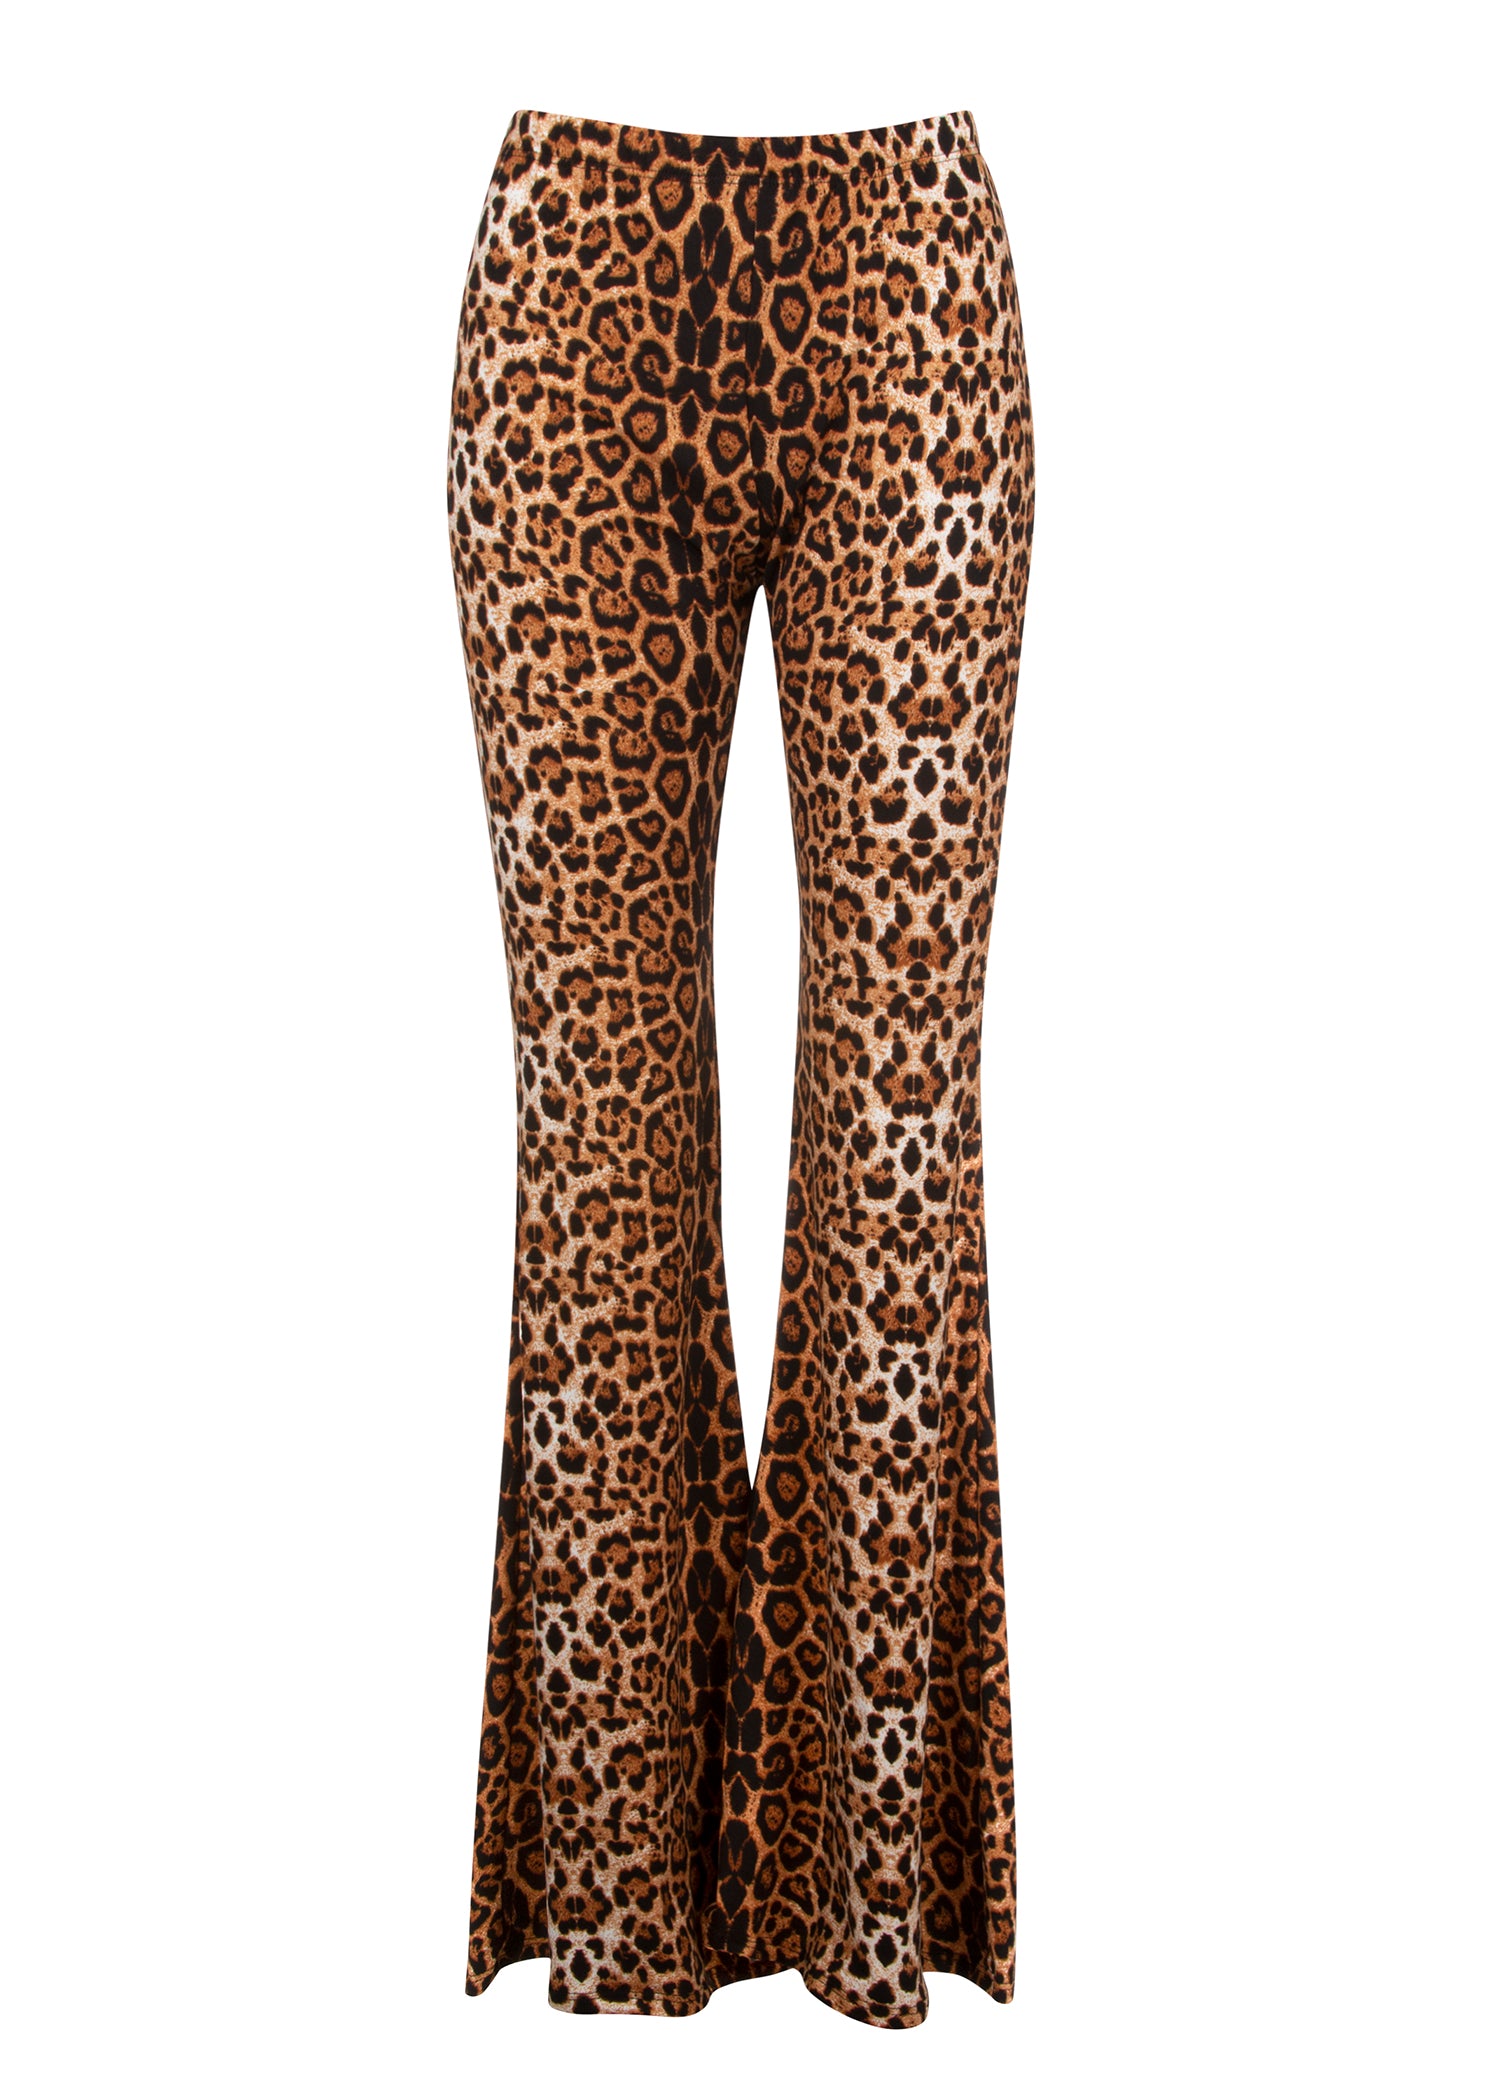 Leopard Print Flare Pants | Cheetah Bell Bottoms | Pretty Attitude ...